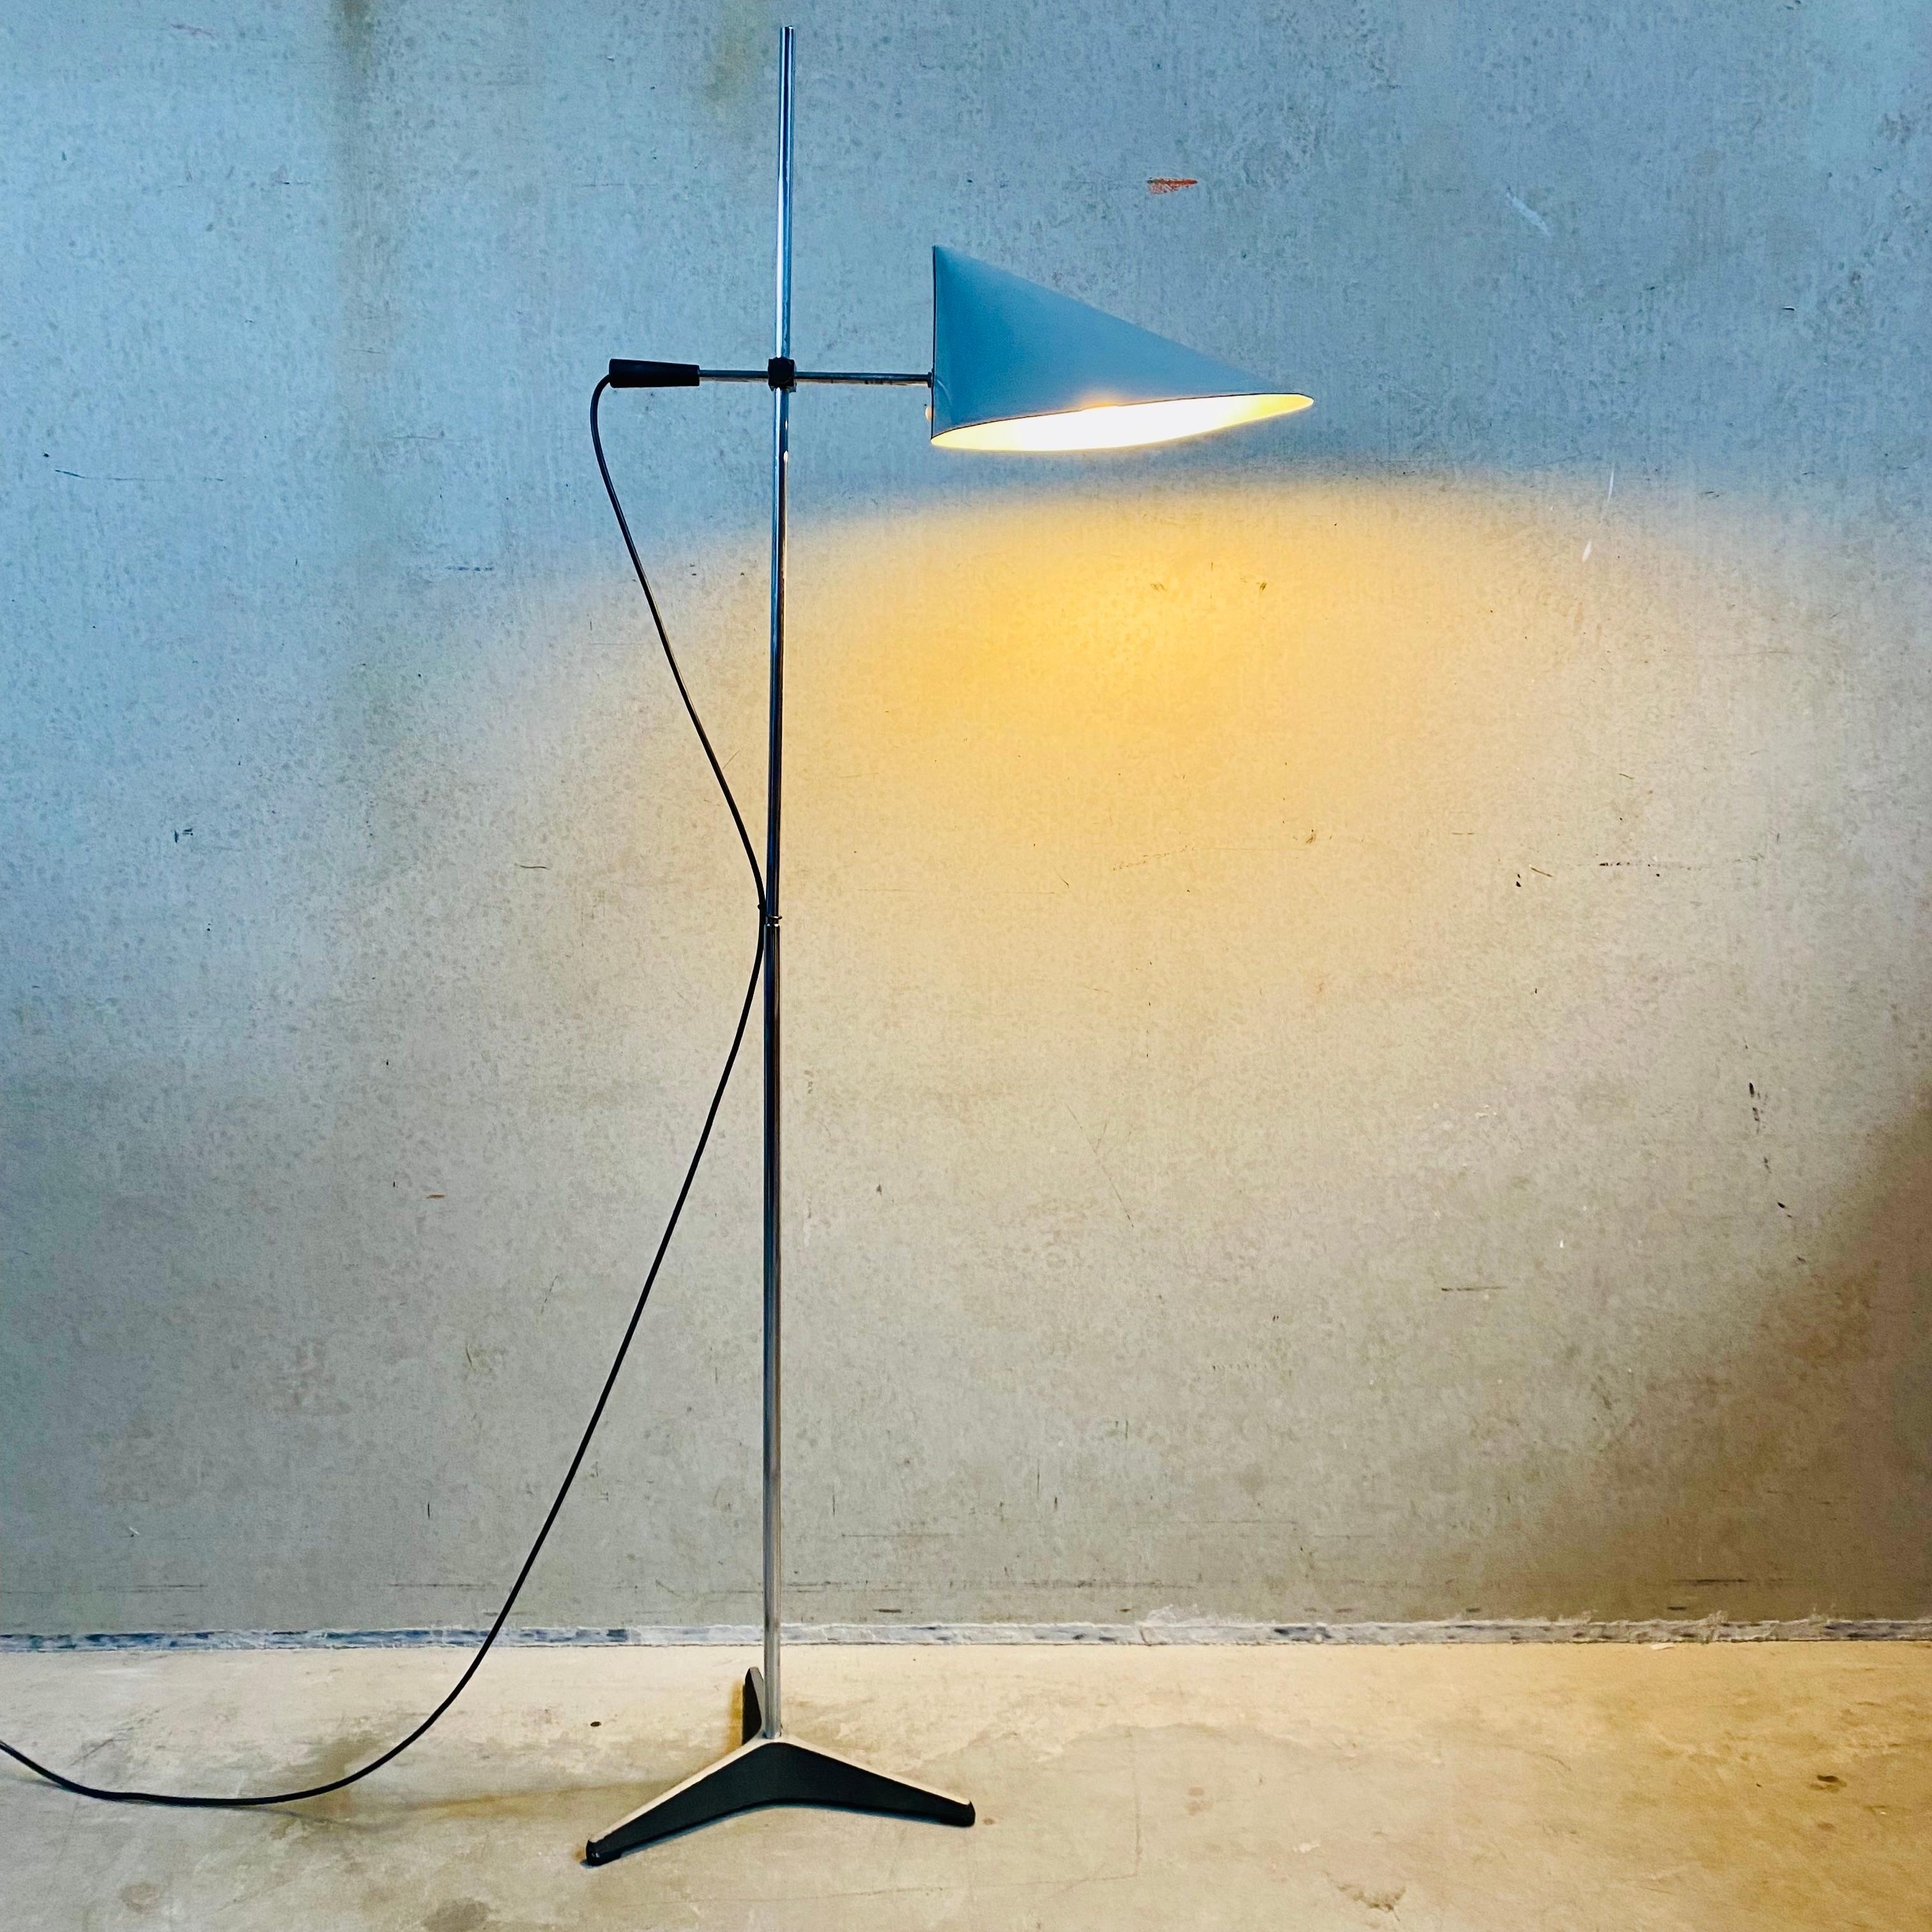 Metal Mid-Century Floor Lamp D-2003 By Jan Jaspers For Raak Amsterdam Netherlands 1950 For Sale